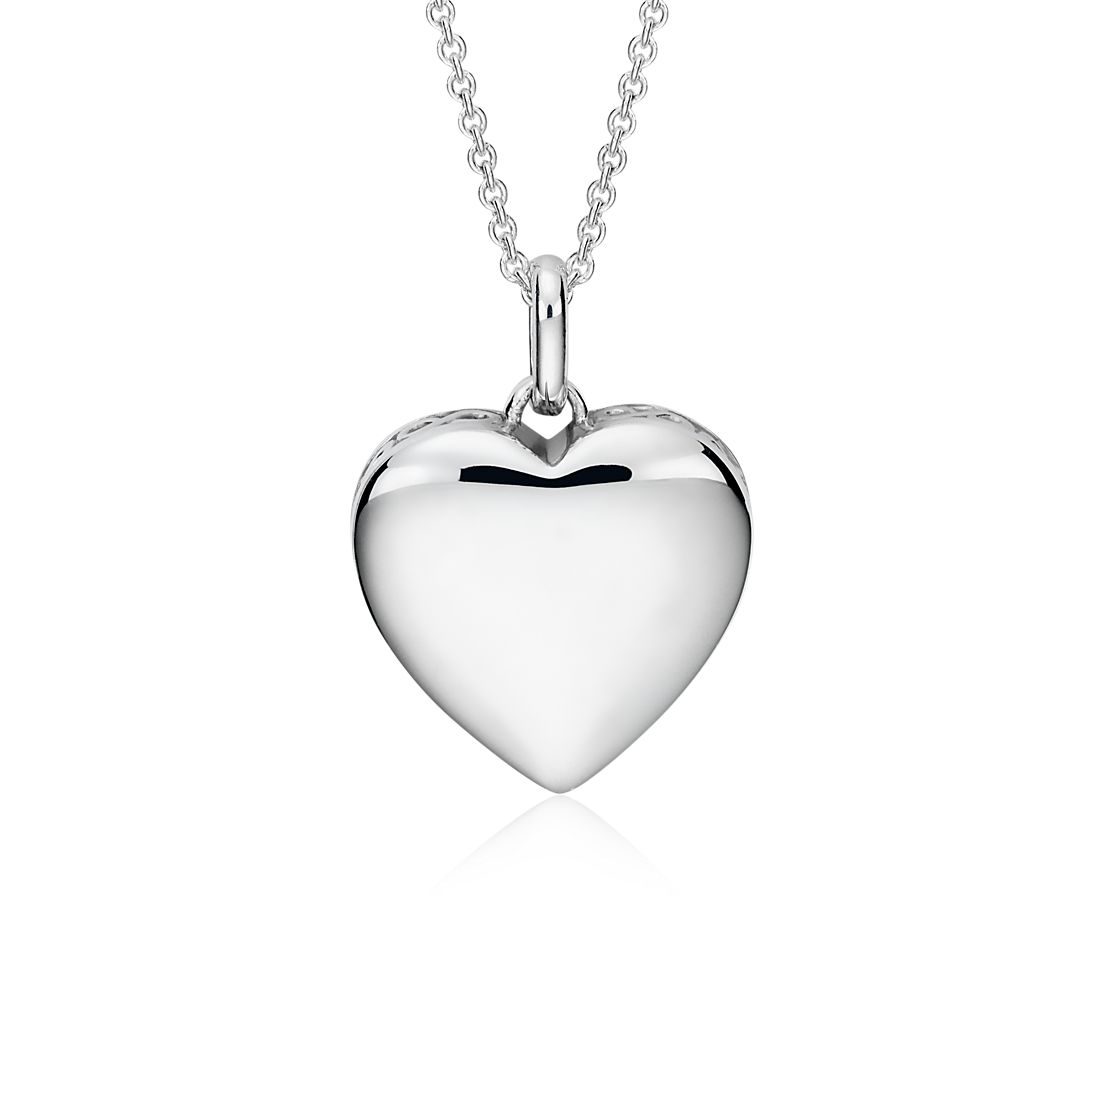 Engravable infinity heart pendant